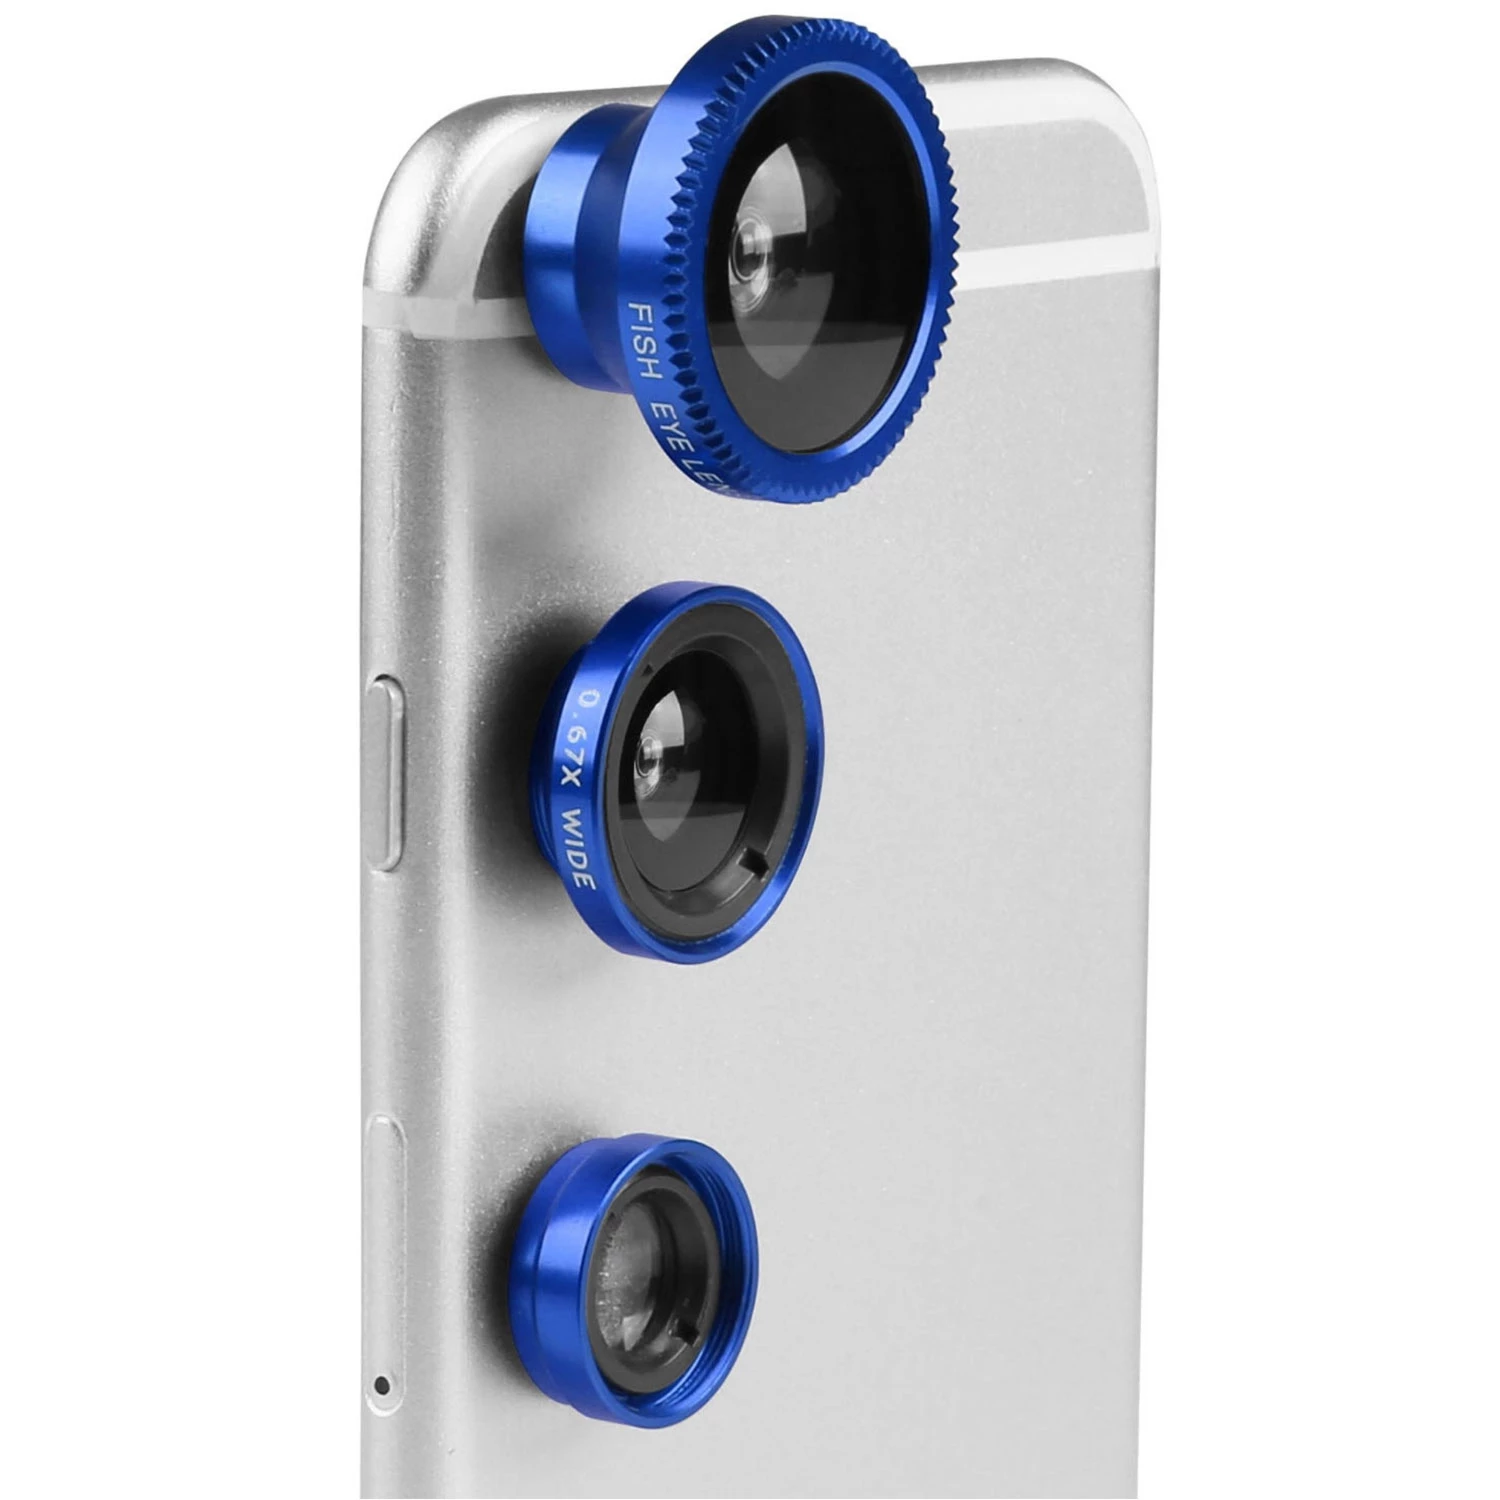 Lens Kit: 180° Fisheye, 0.67x Wide Angle, 10X Macro for iPhone X/8/7, Samsung S10/S9